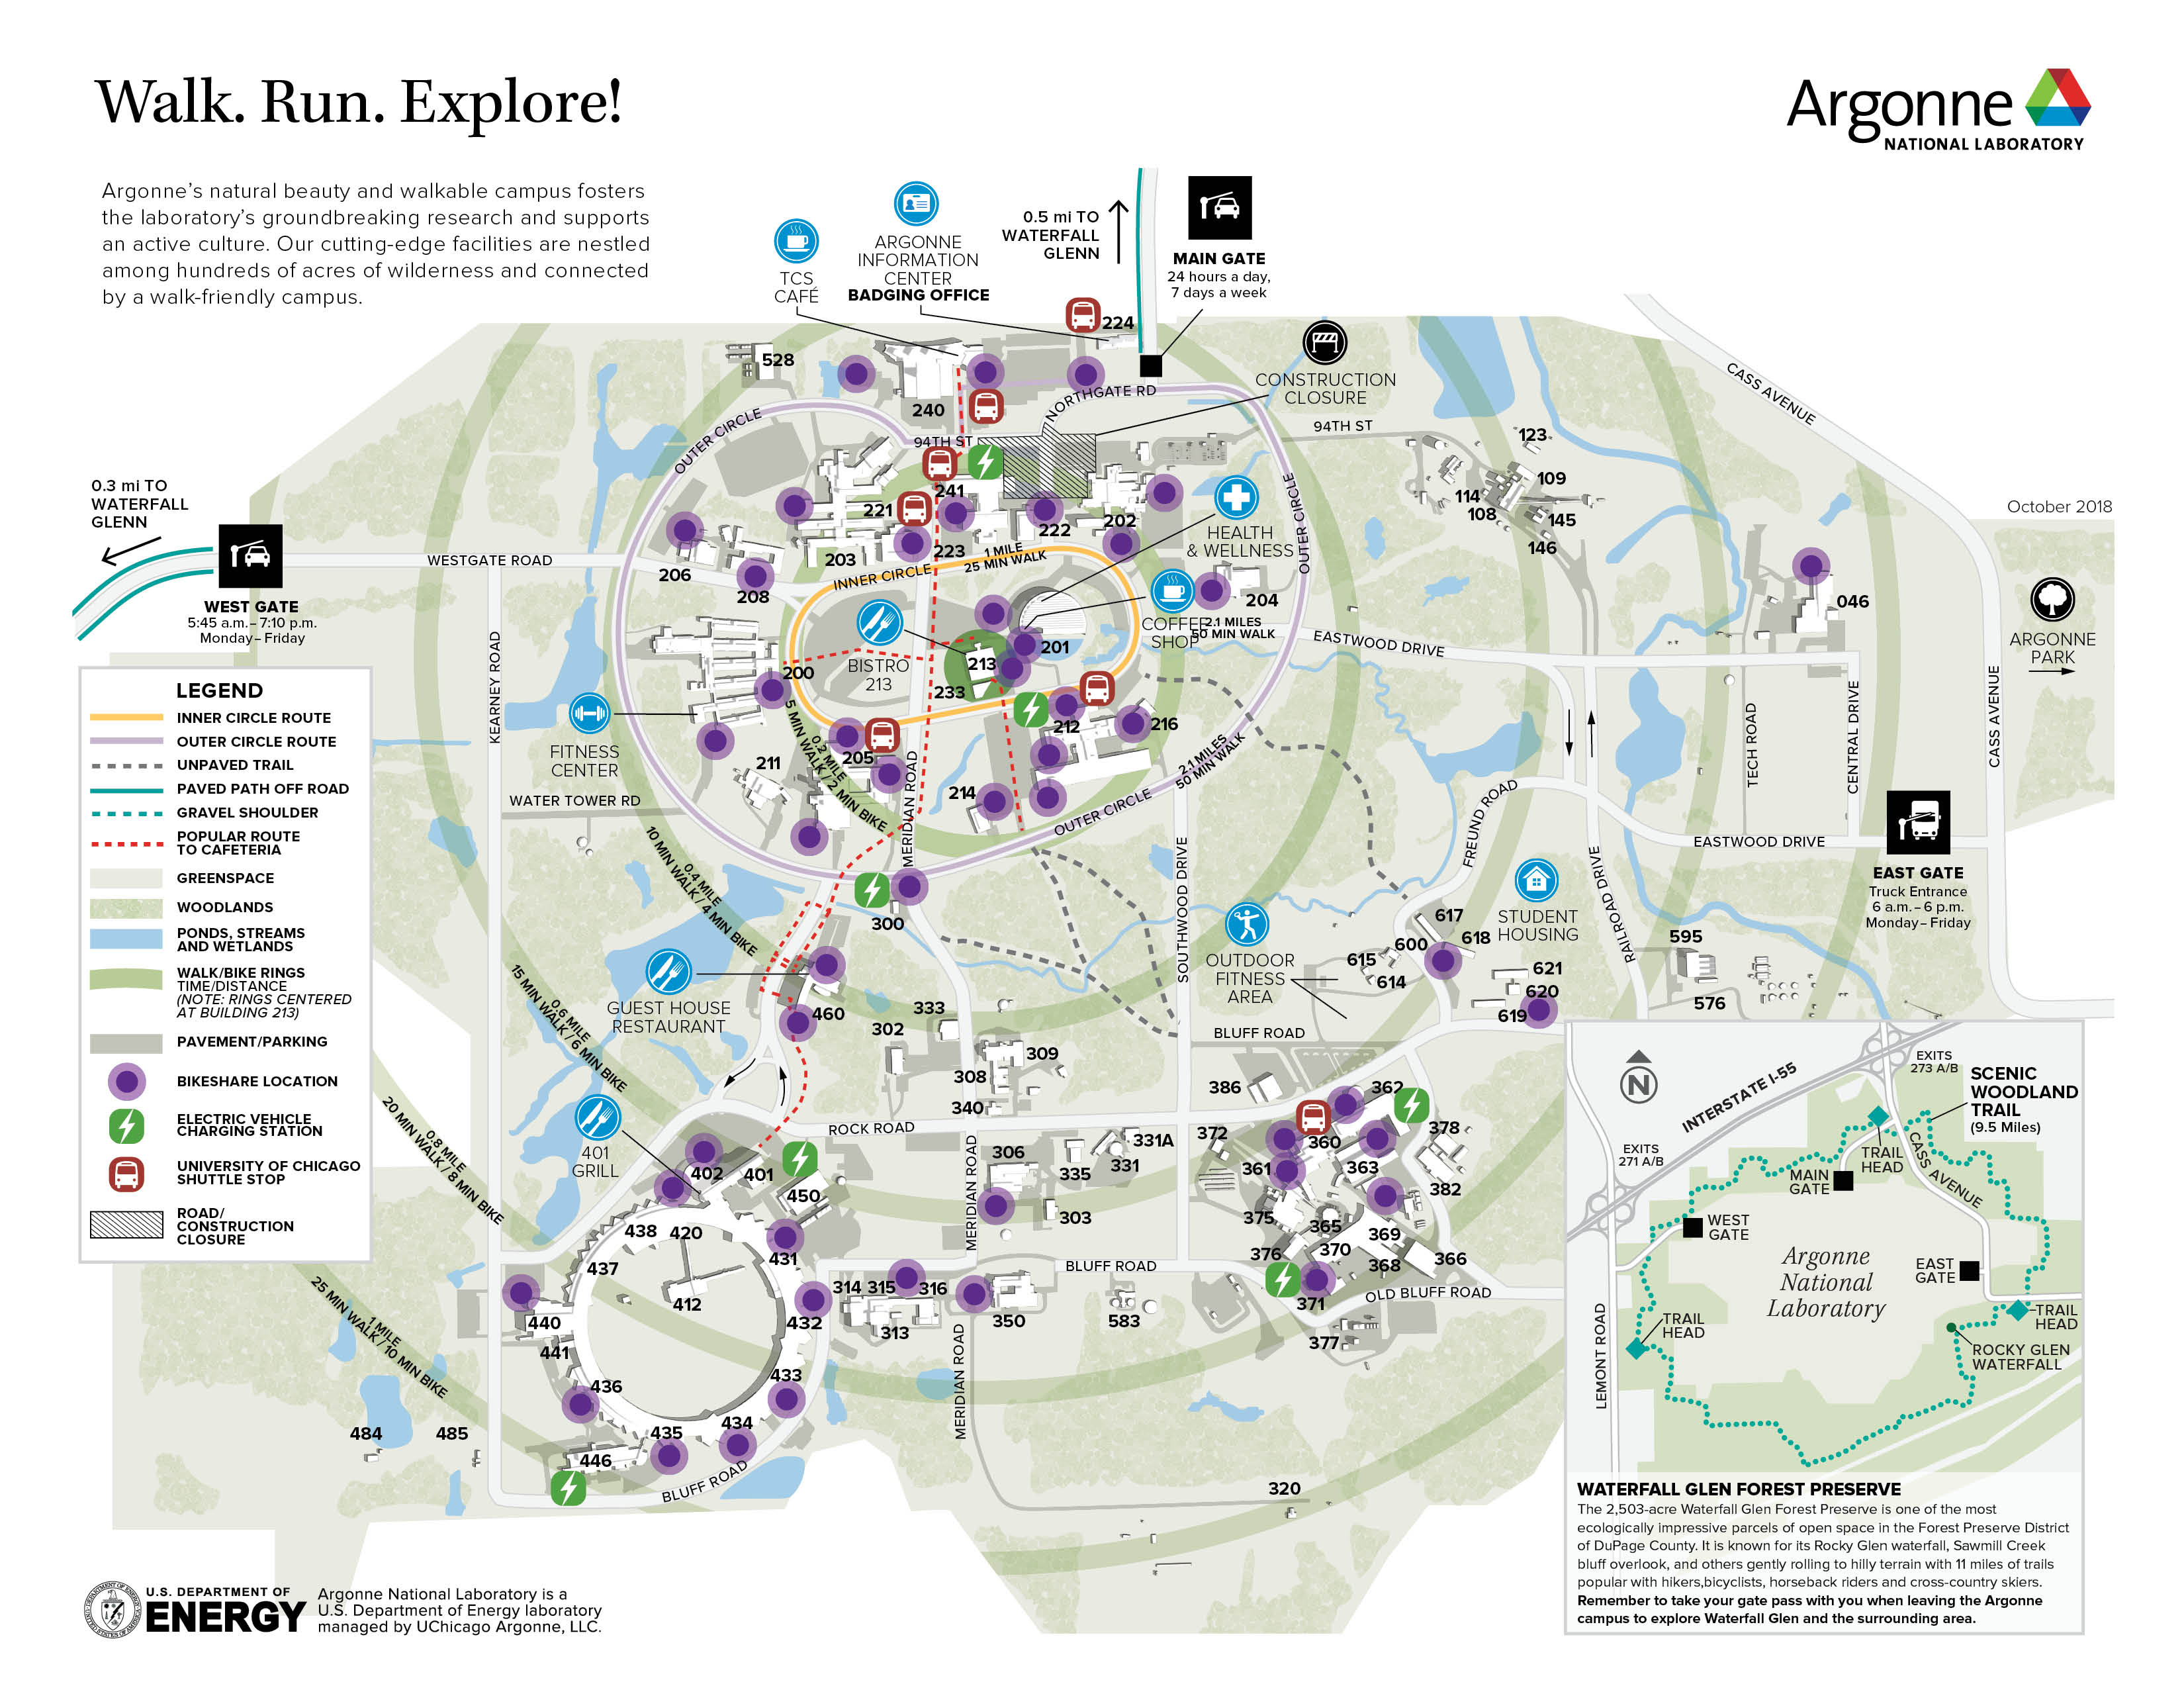 Walk. Run. Explore! Campus Map